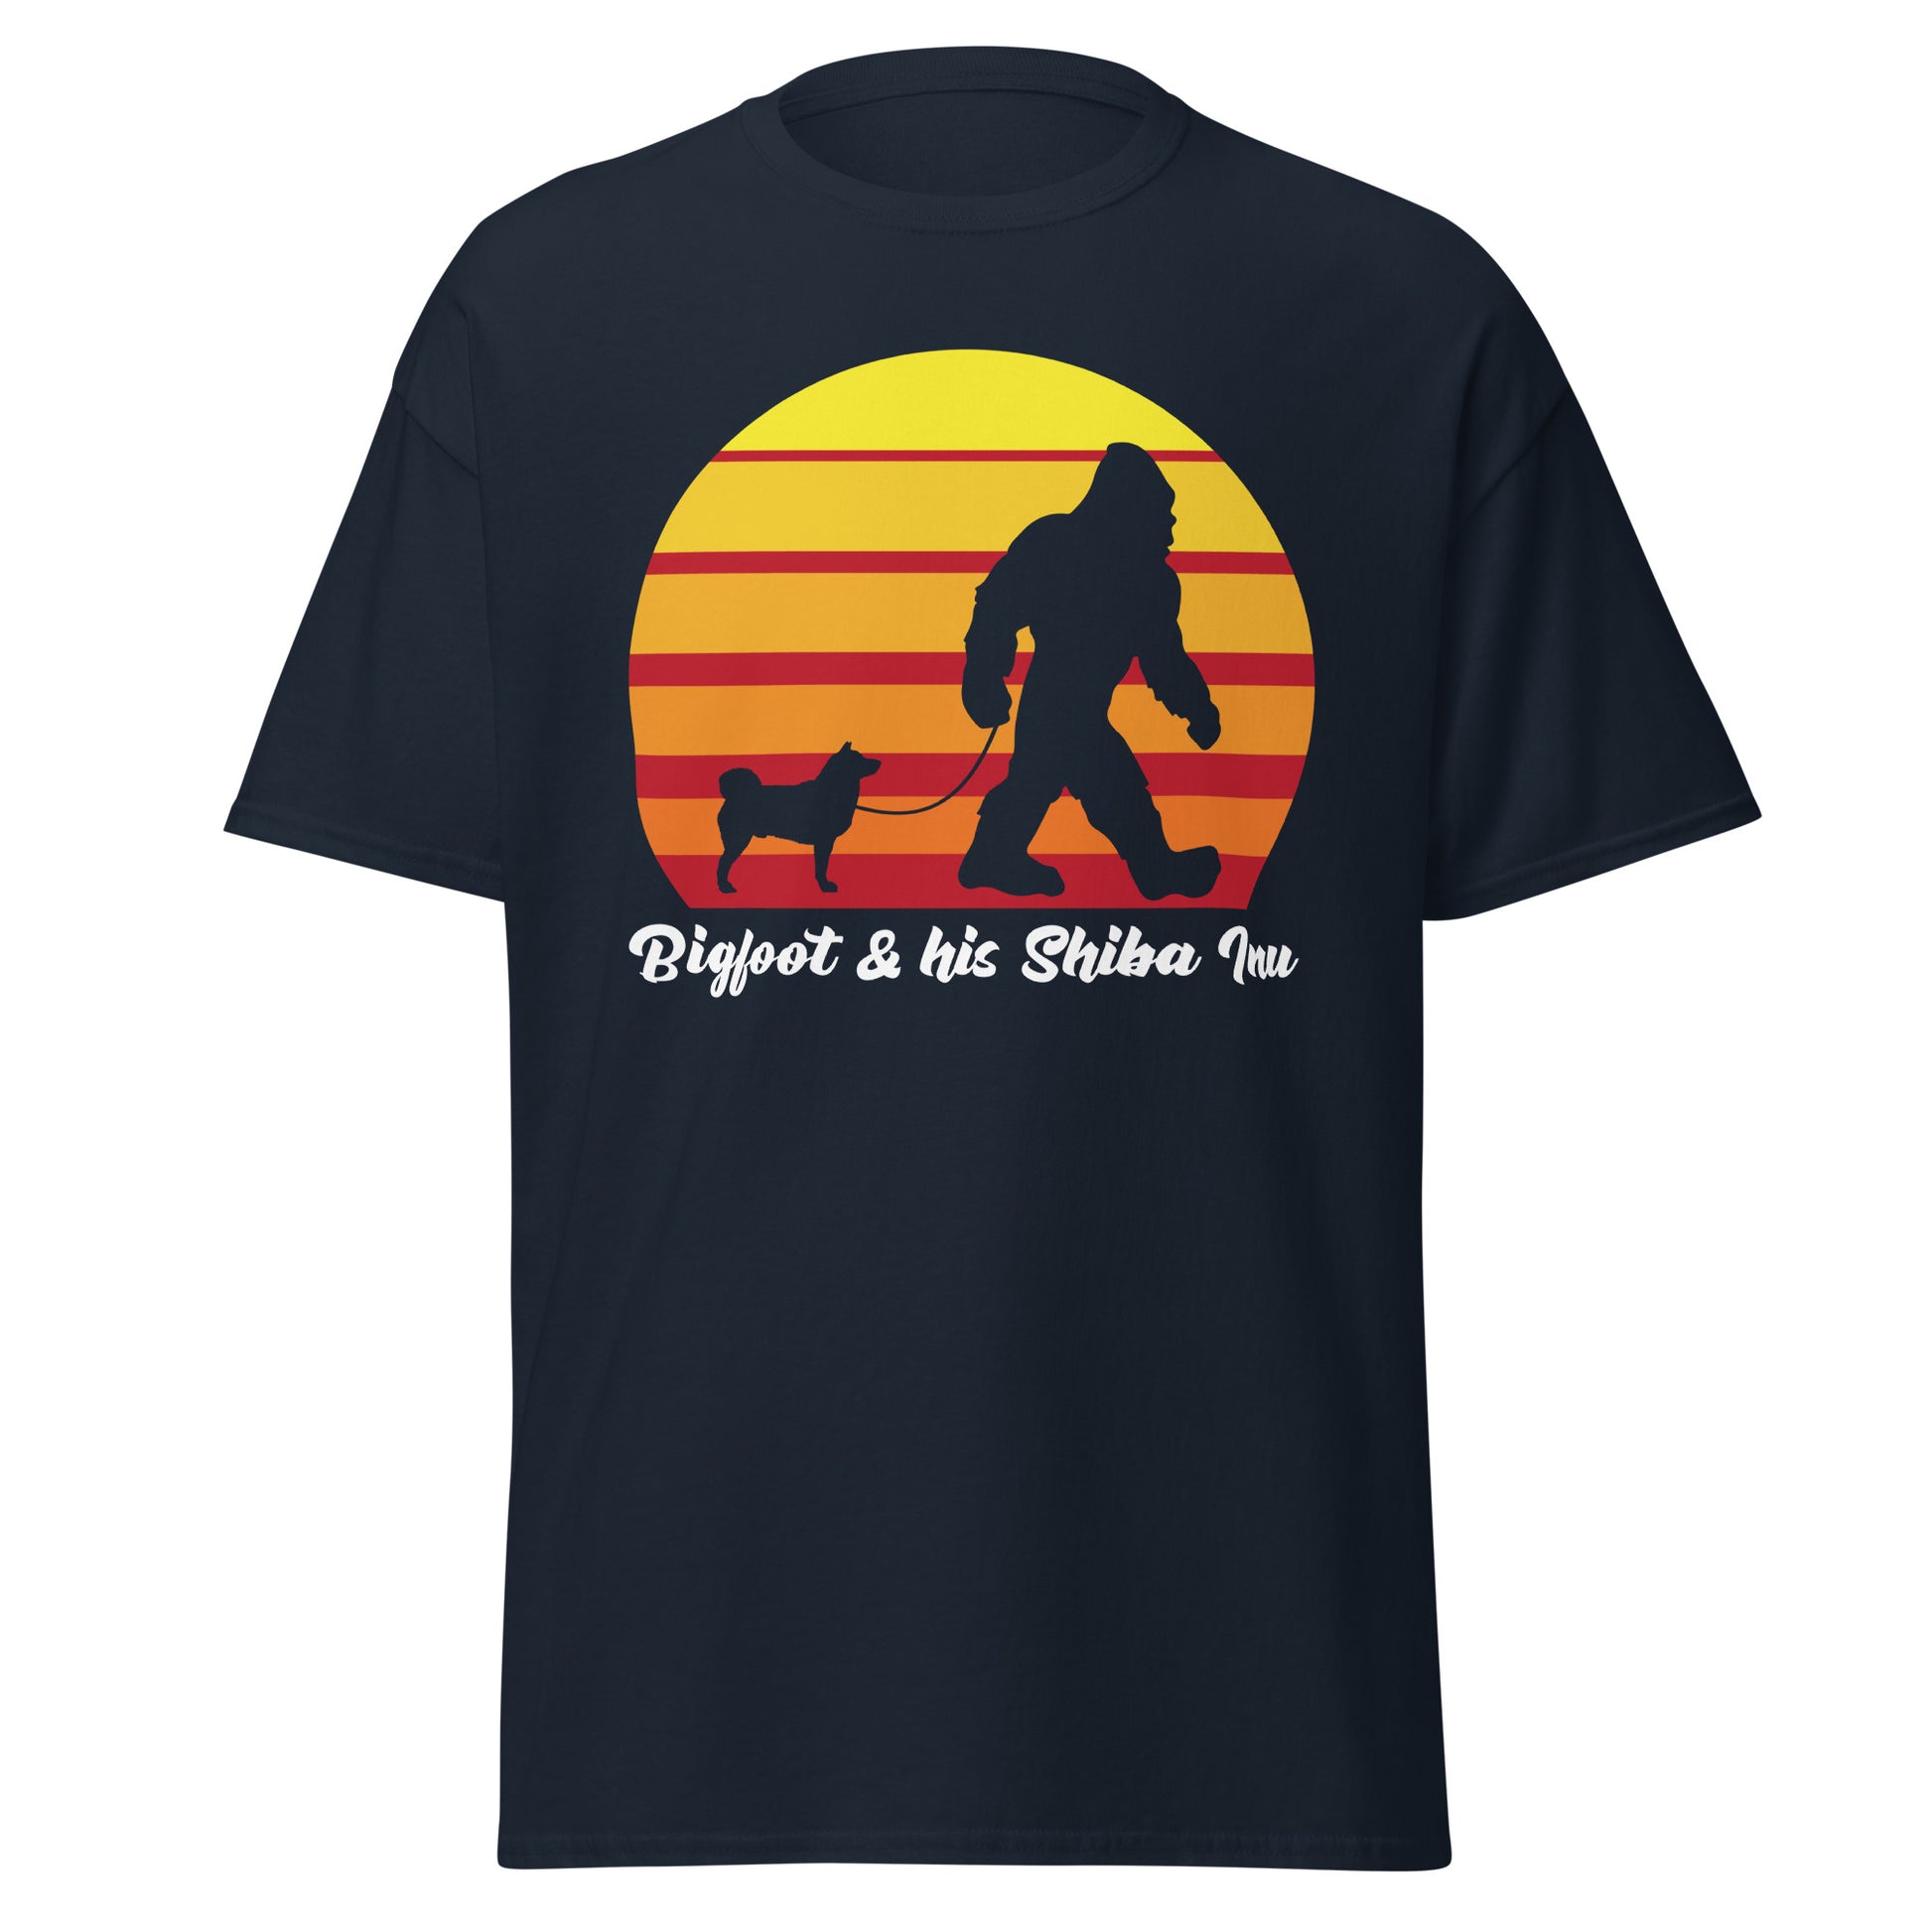 Bigfoot and his Shiba Inu men’s navy t-shirt by Dog Artistry.